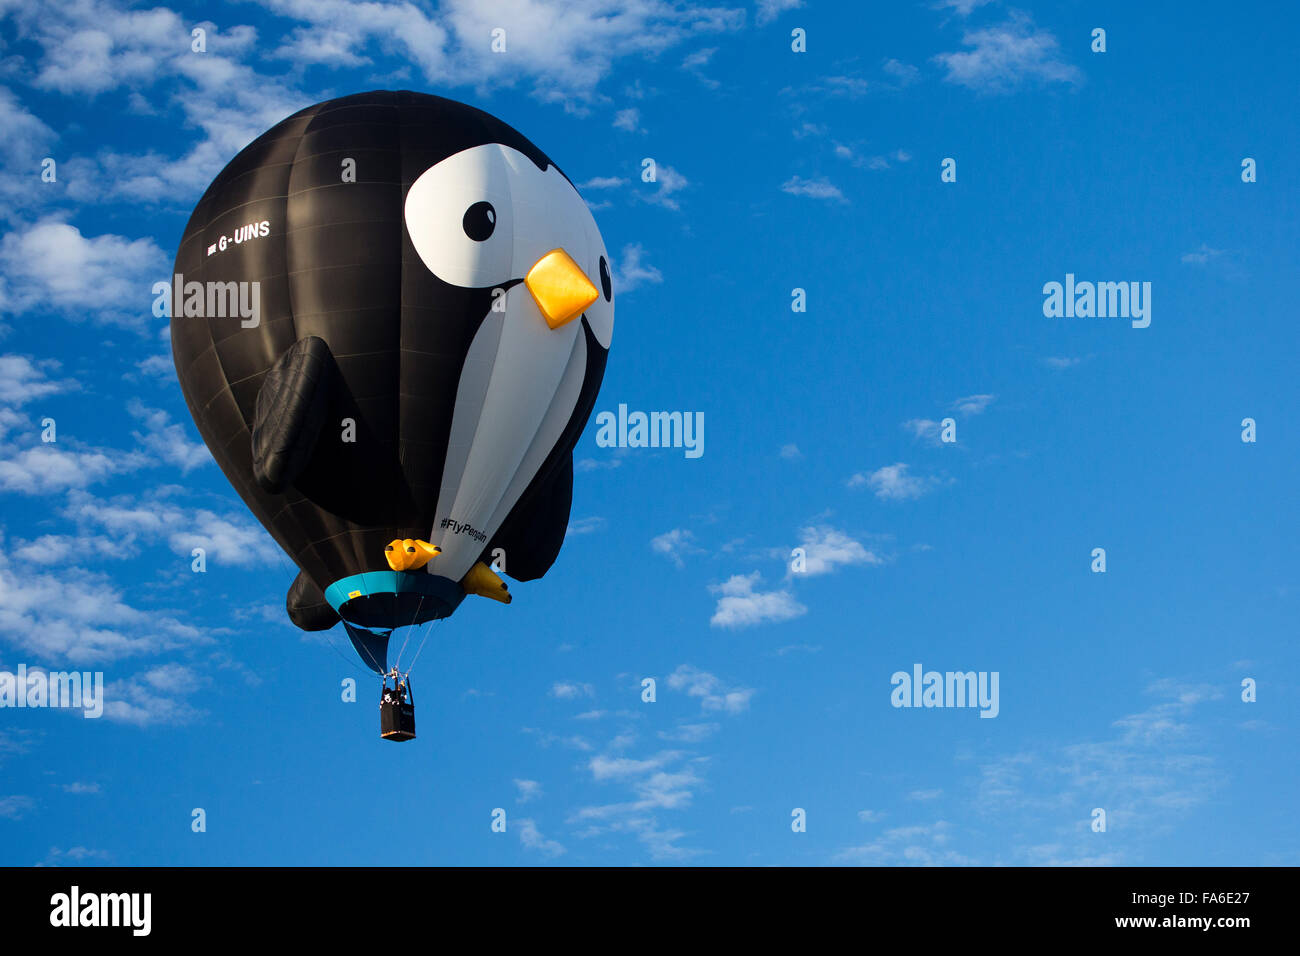 Penguin Hot Air Balloon at the Bristol International Hot Air Balloon Fiesta 2015 Stock Photo